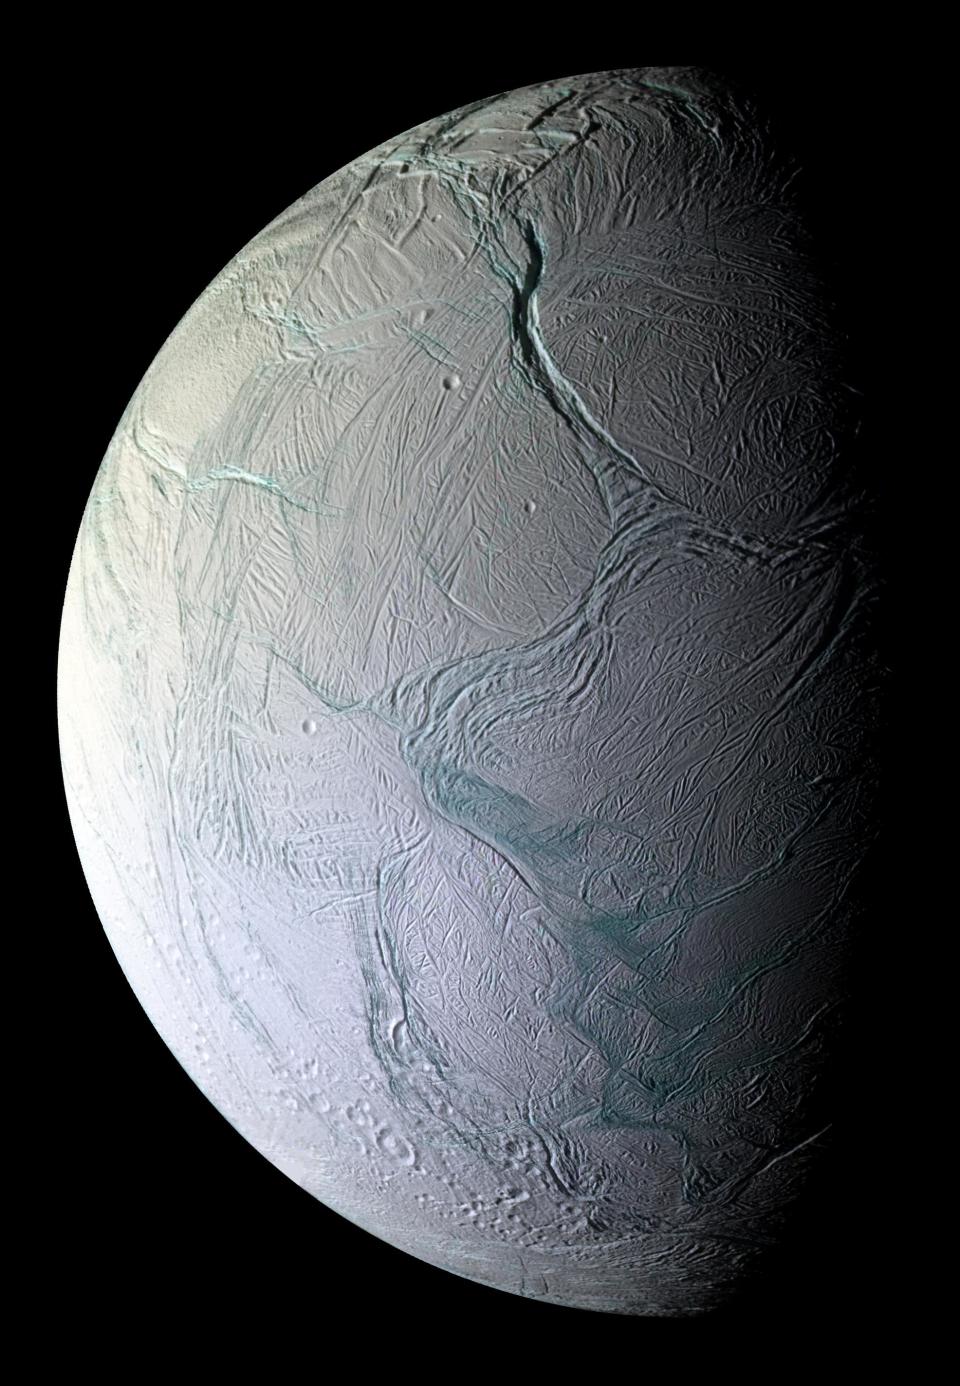 Photo credit: NASA/JPL/Space Science Institute